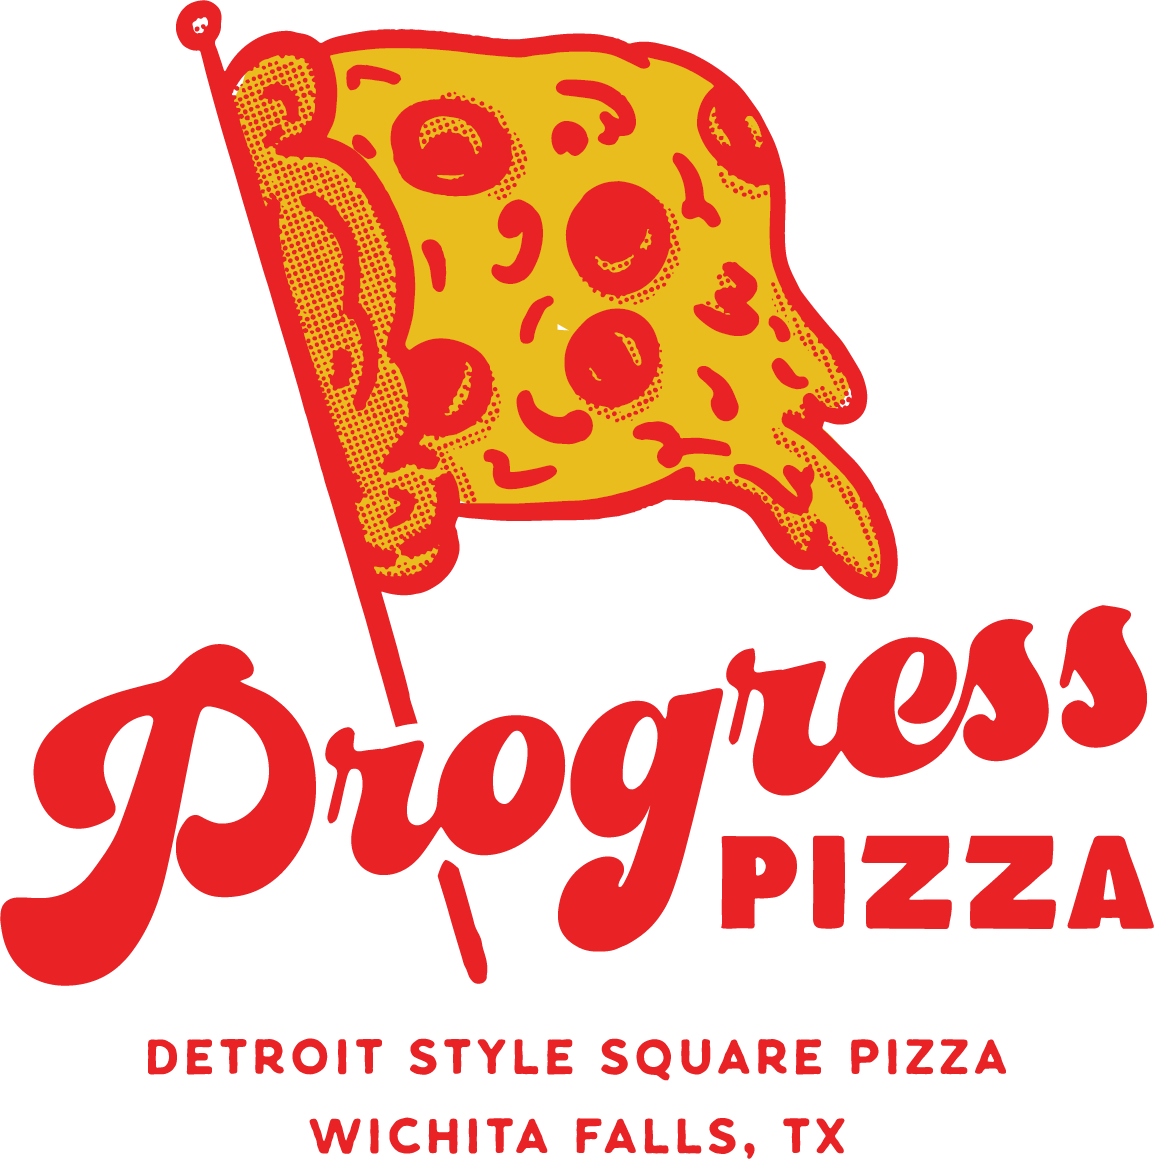 Progress Pizza